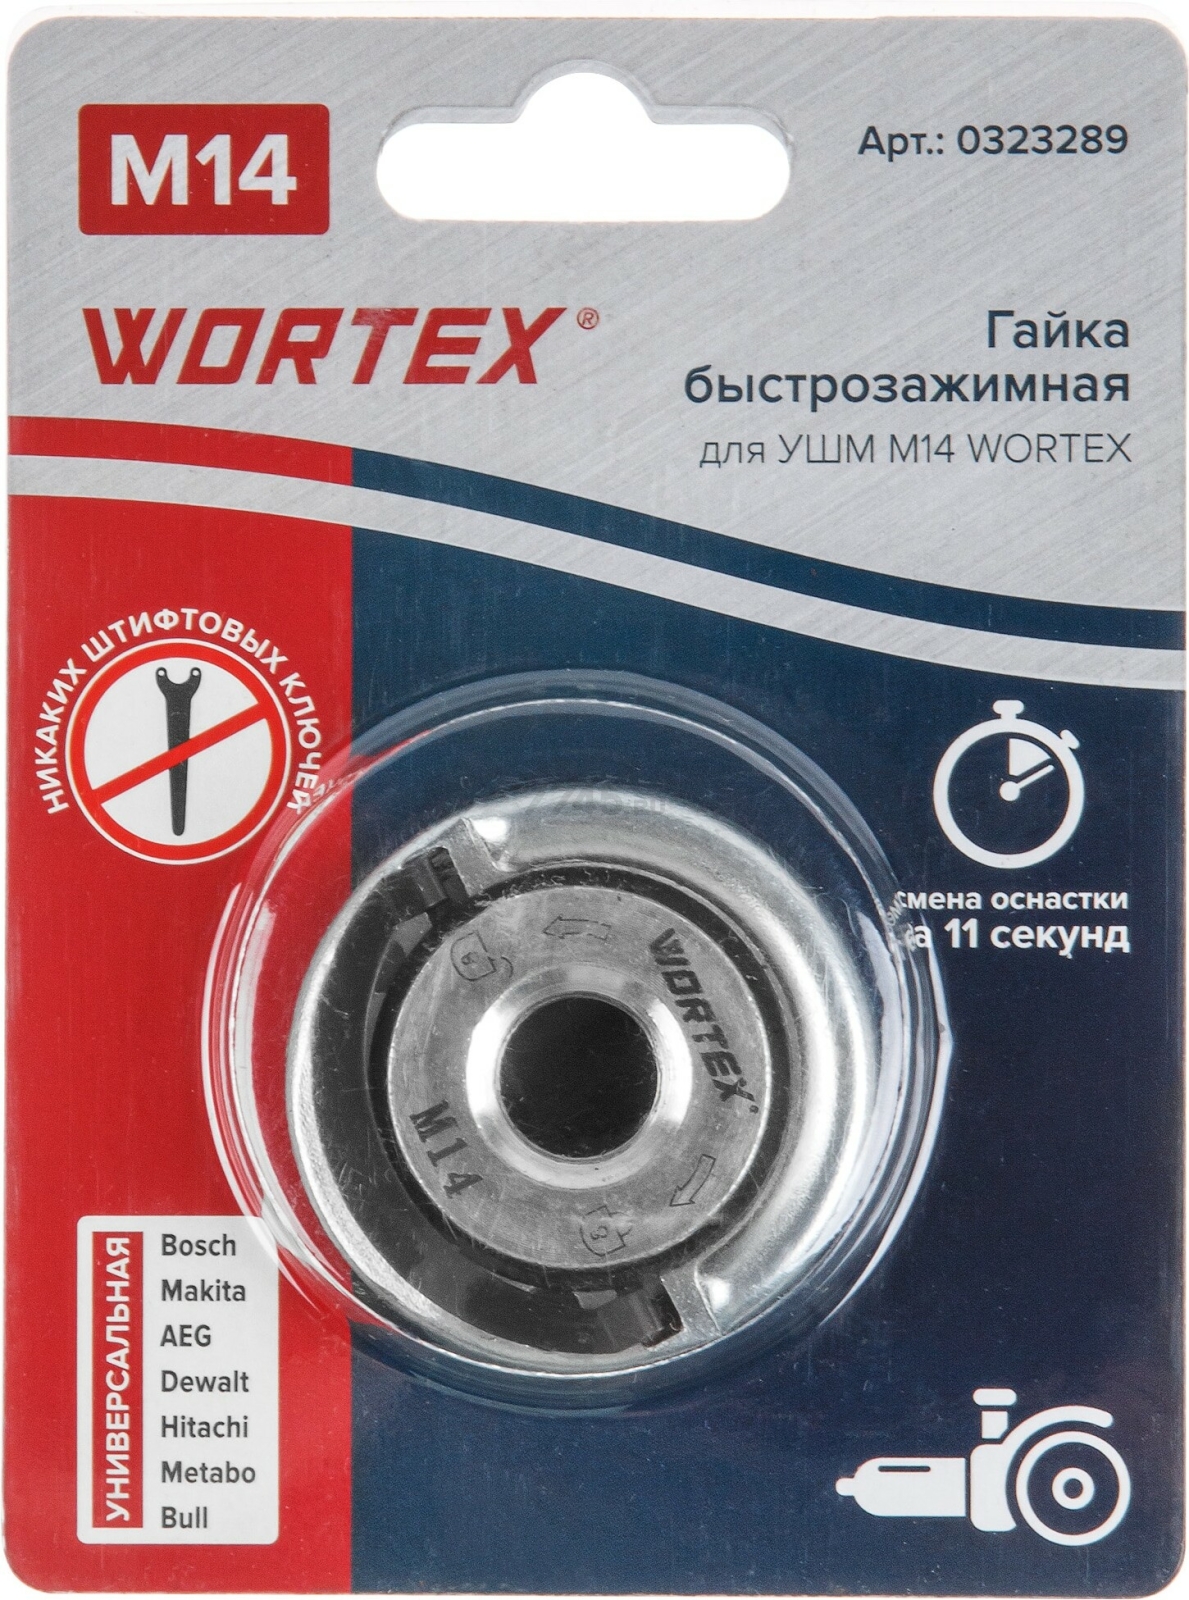 Гайка M14 WORTEX для УШМ (болгарки) (0323289) - Фото 3